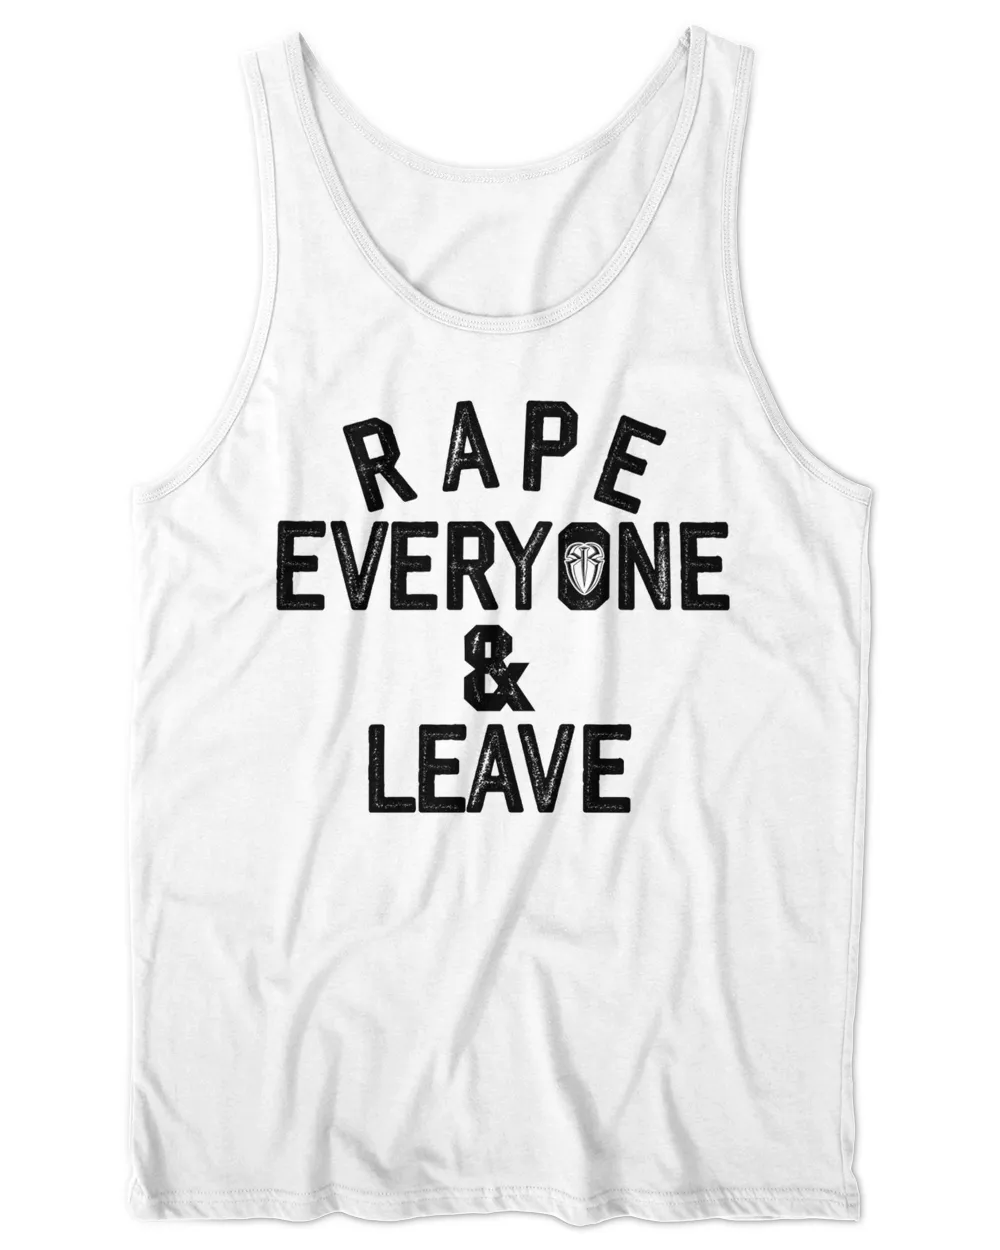 Rape Everyone And Leave T-Shirt